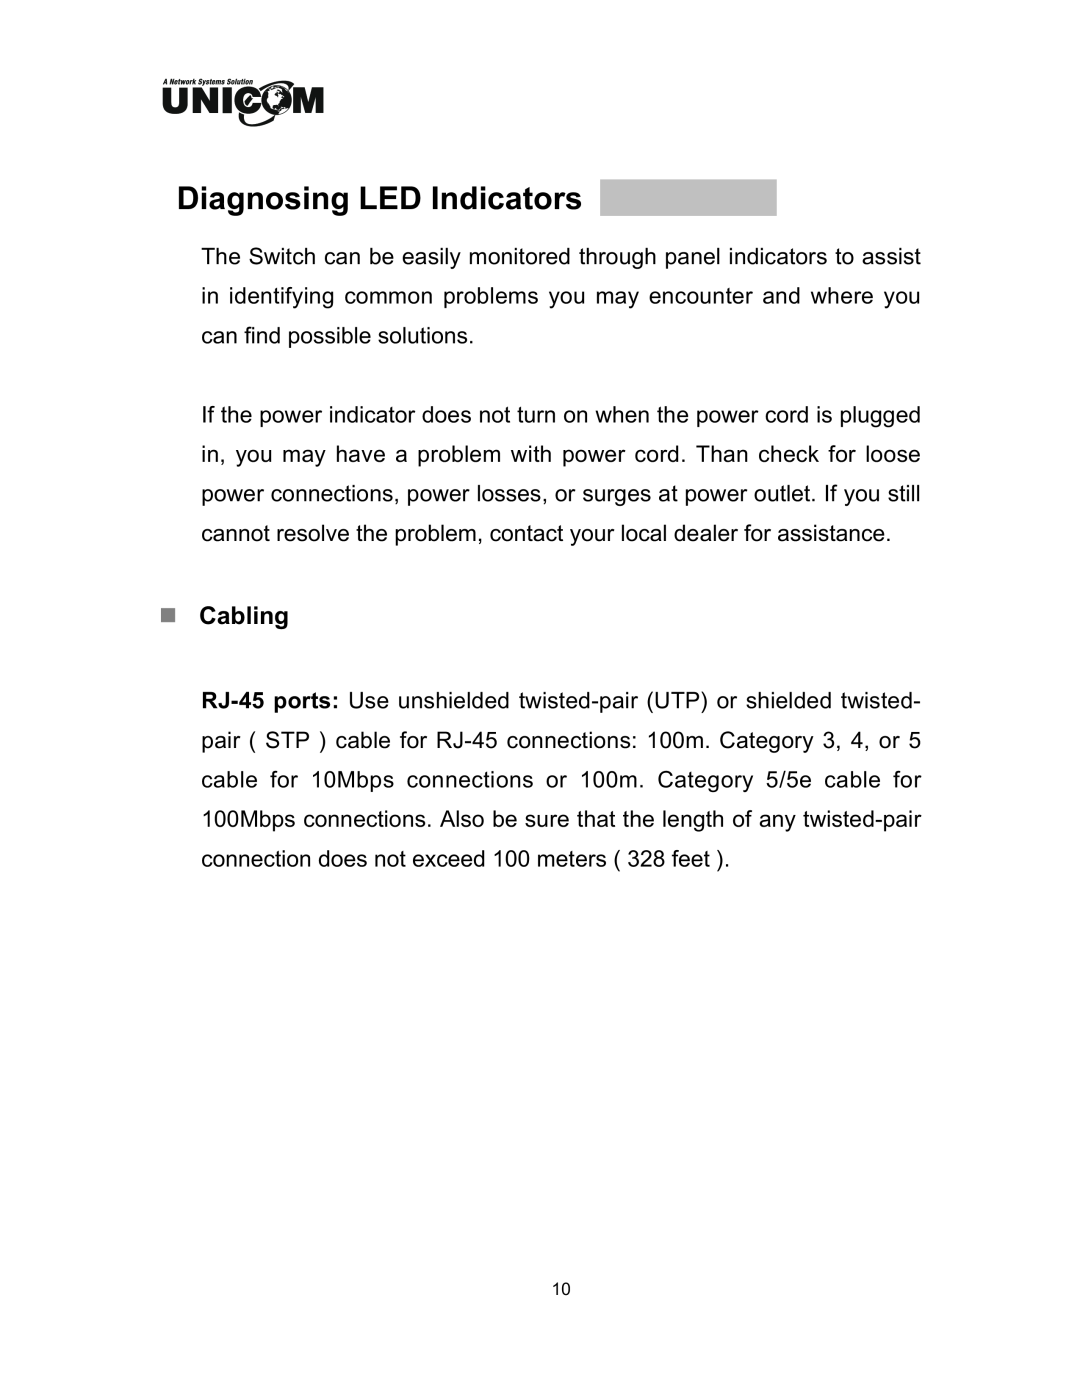 UNICOM Electric FEP-32024T specifications Diagnosing LED Indicators, Cabling 